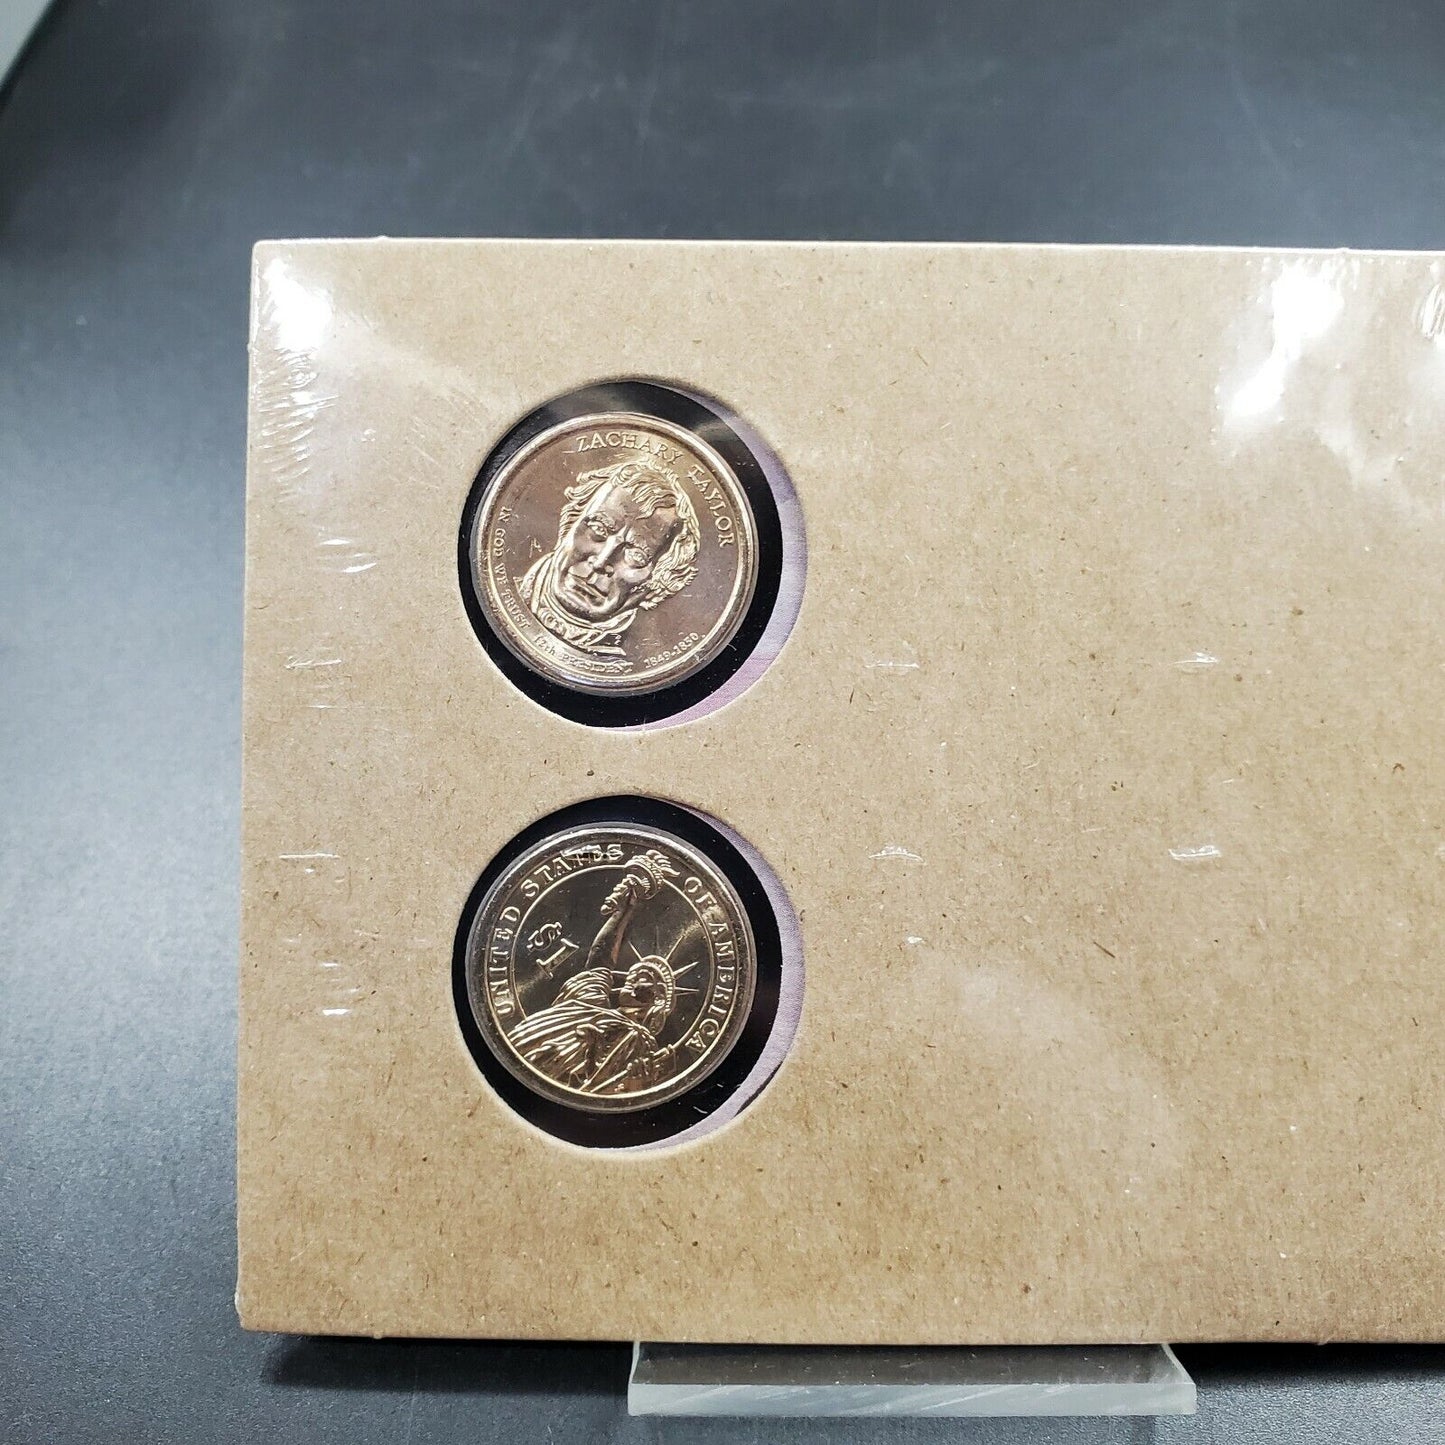 Zachary Taylor 1st  Day Presidential Coin Set BU Philadelphia & Denver Mint ST2